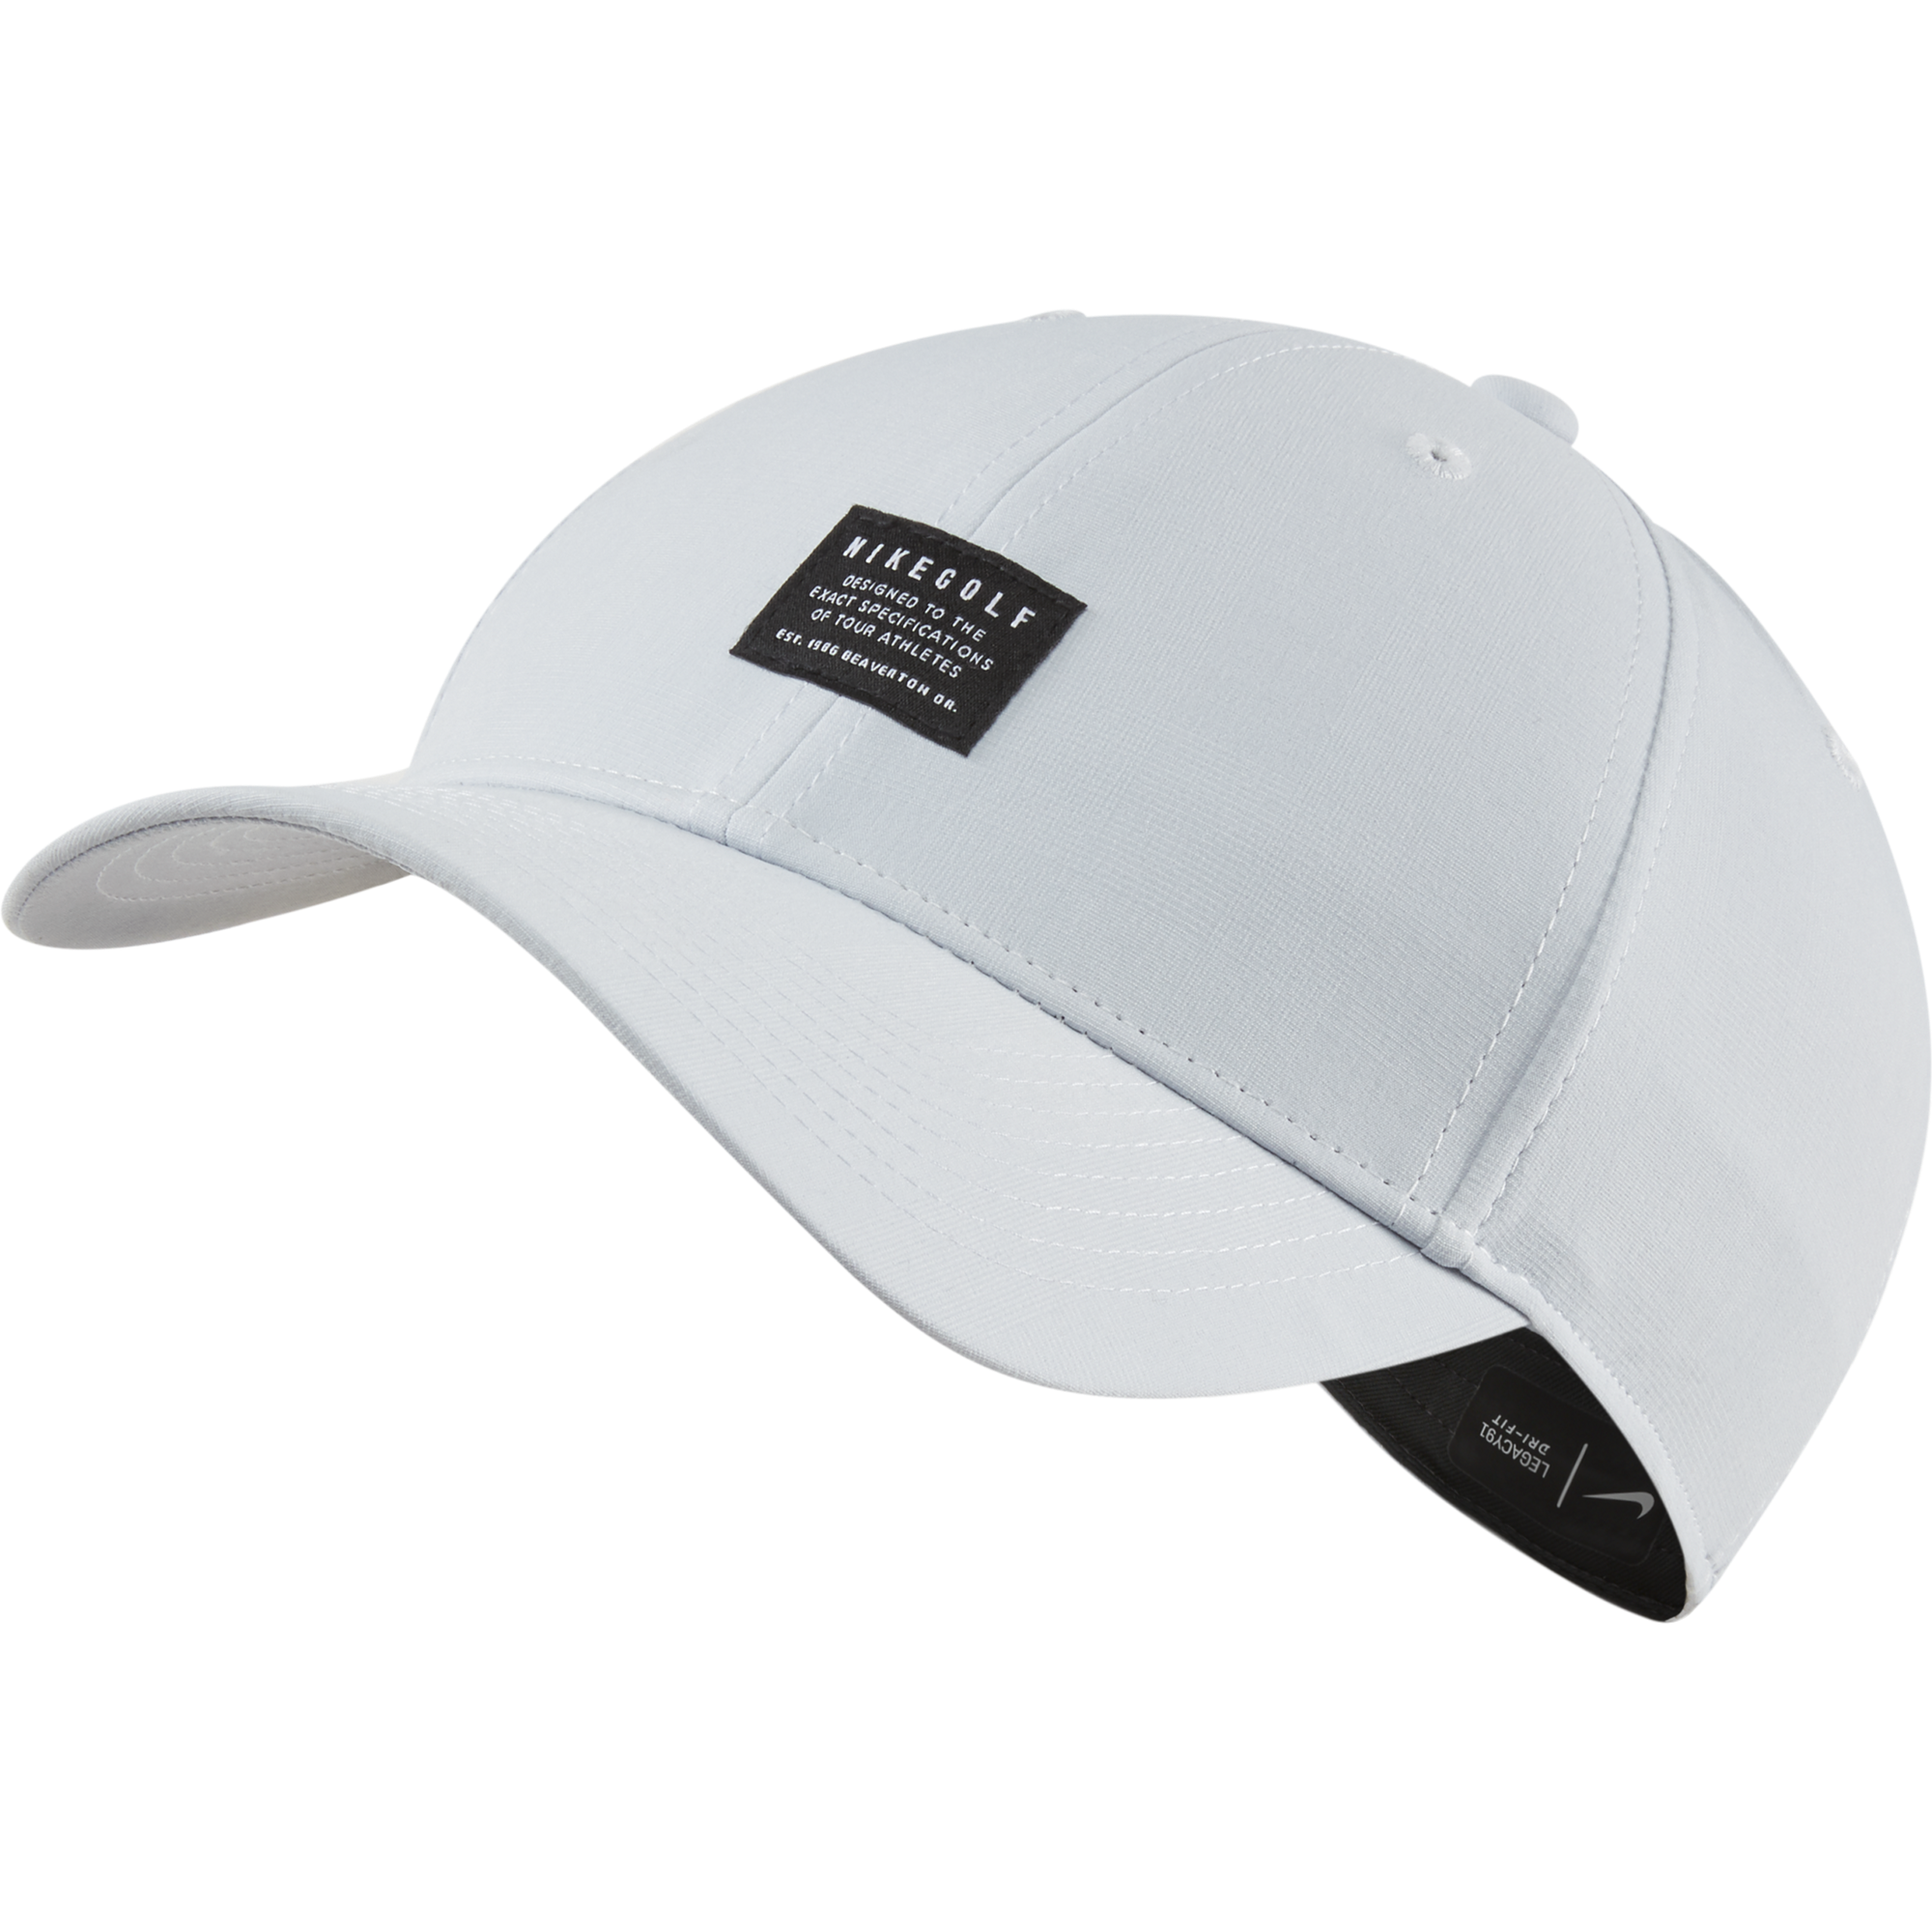 nike men's 2020 legacy91 novelty golf hat